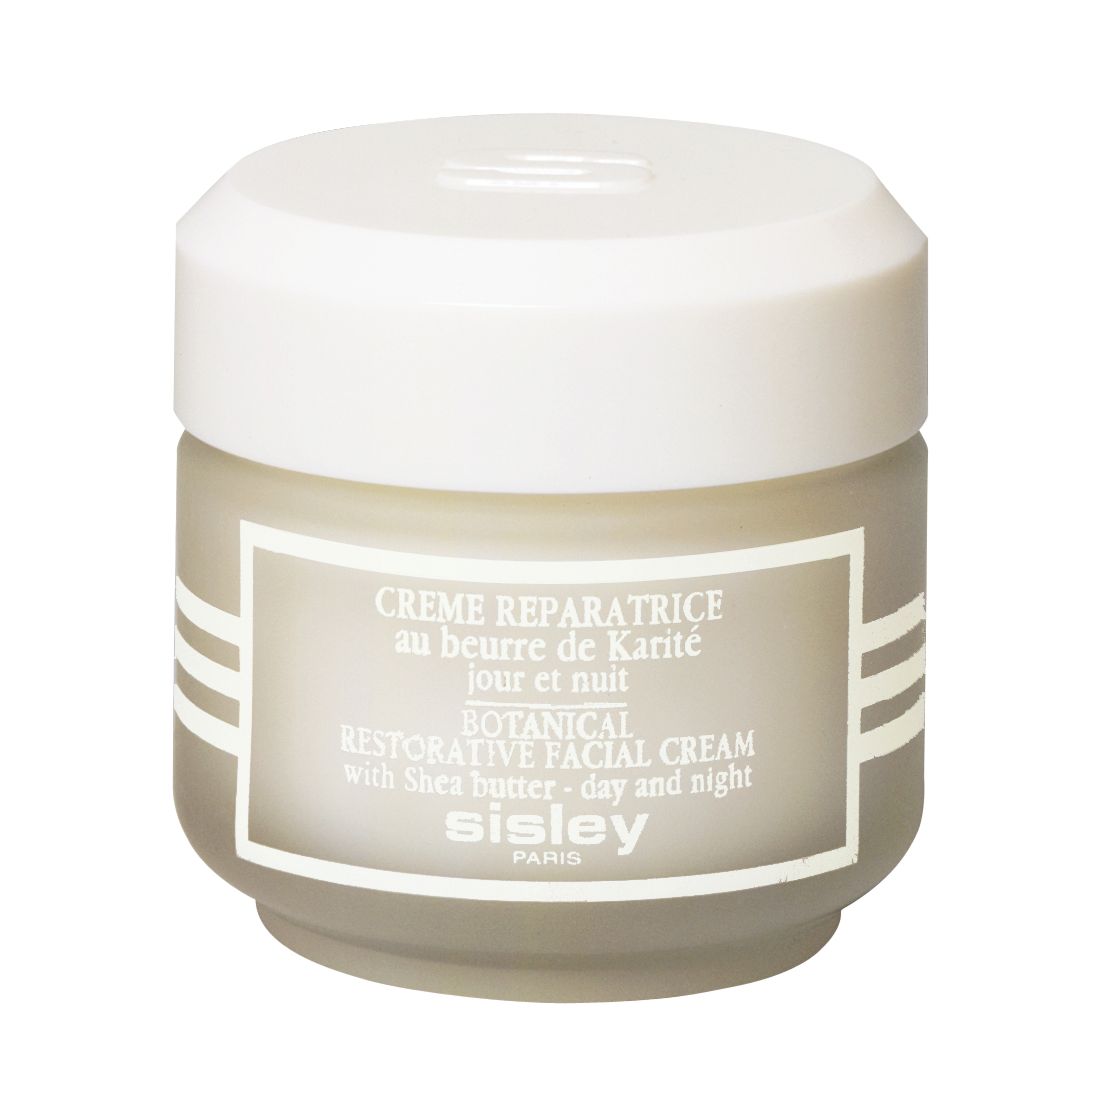 Sisley-Paris Botanical Restorative Face Cream, 50ml at John Lewis & Partners